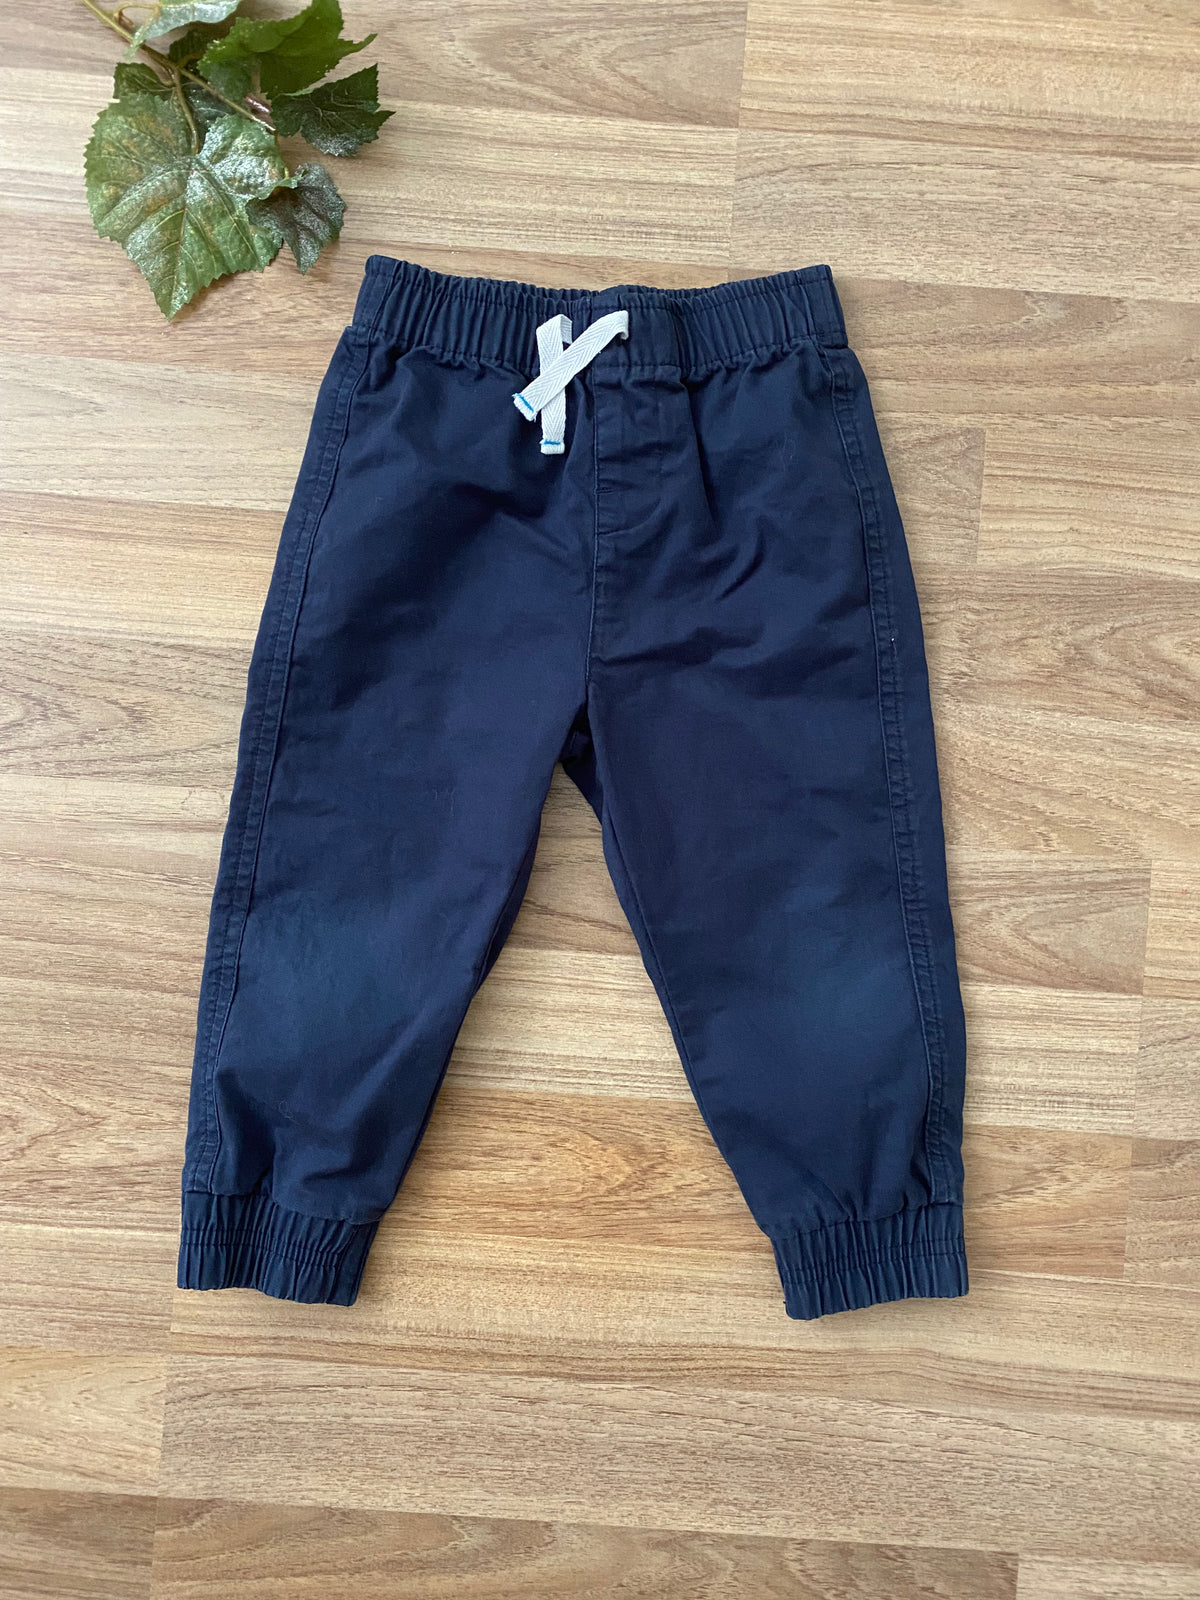 Jogger Pants (Boys Size 12-18M)